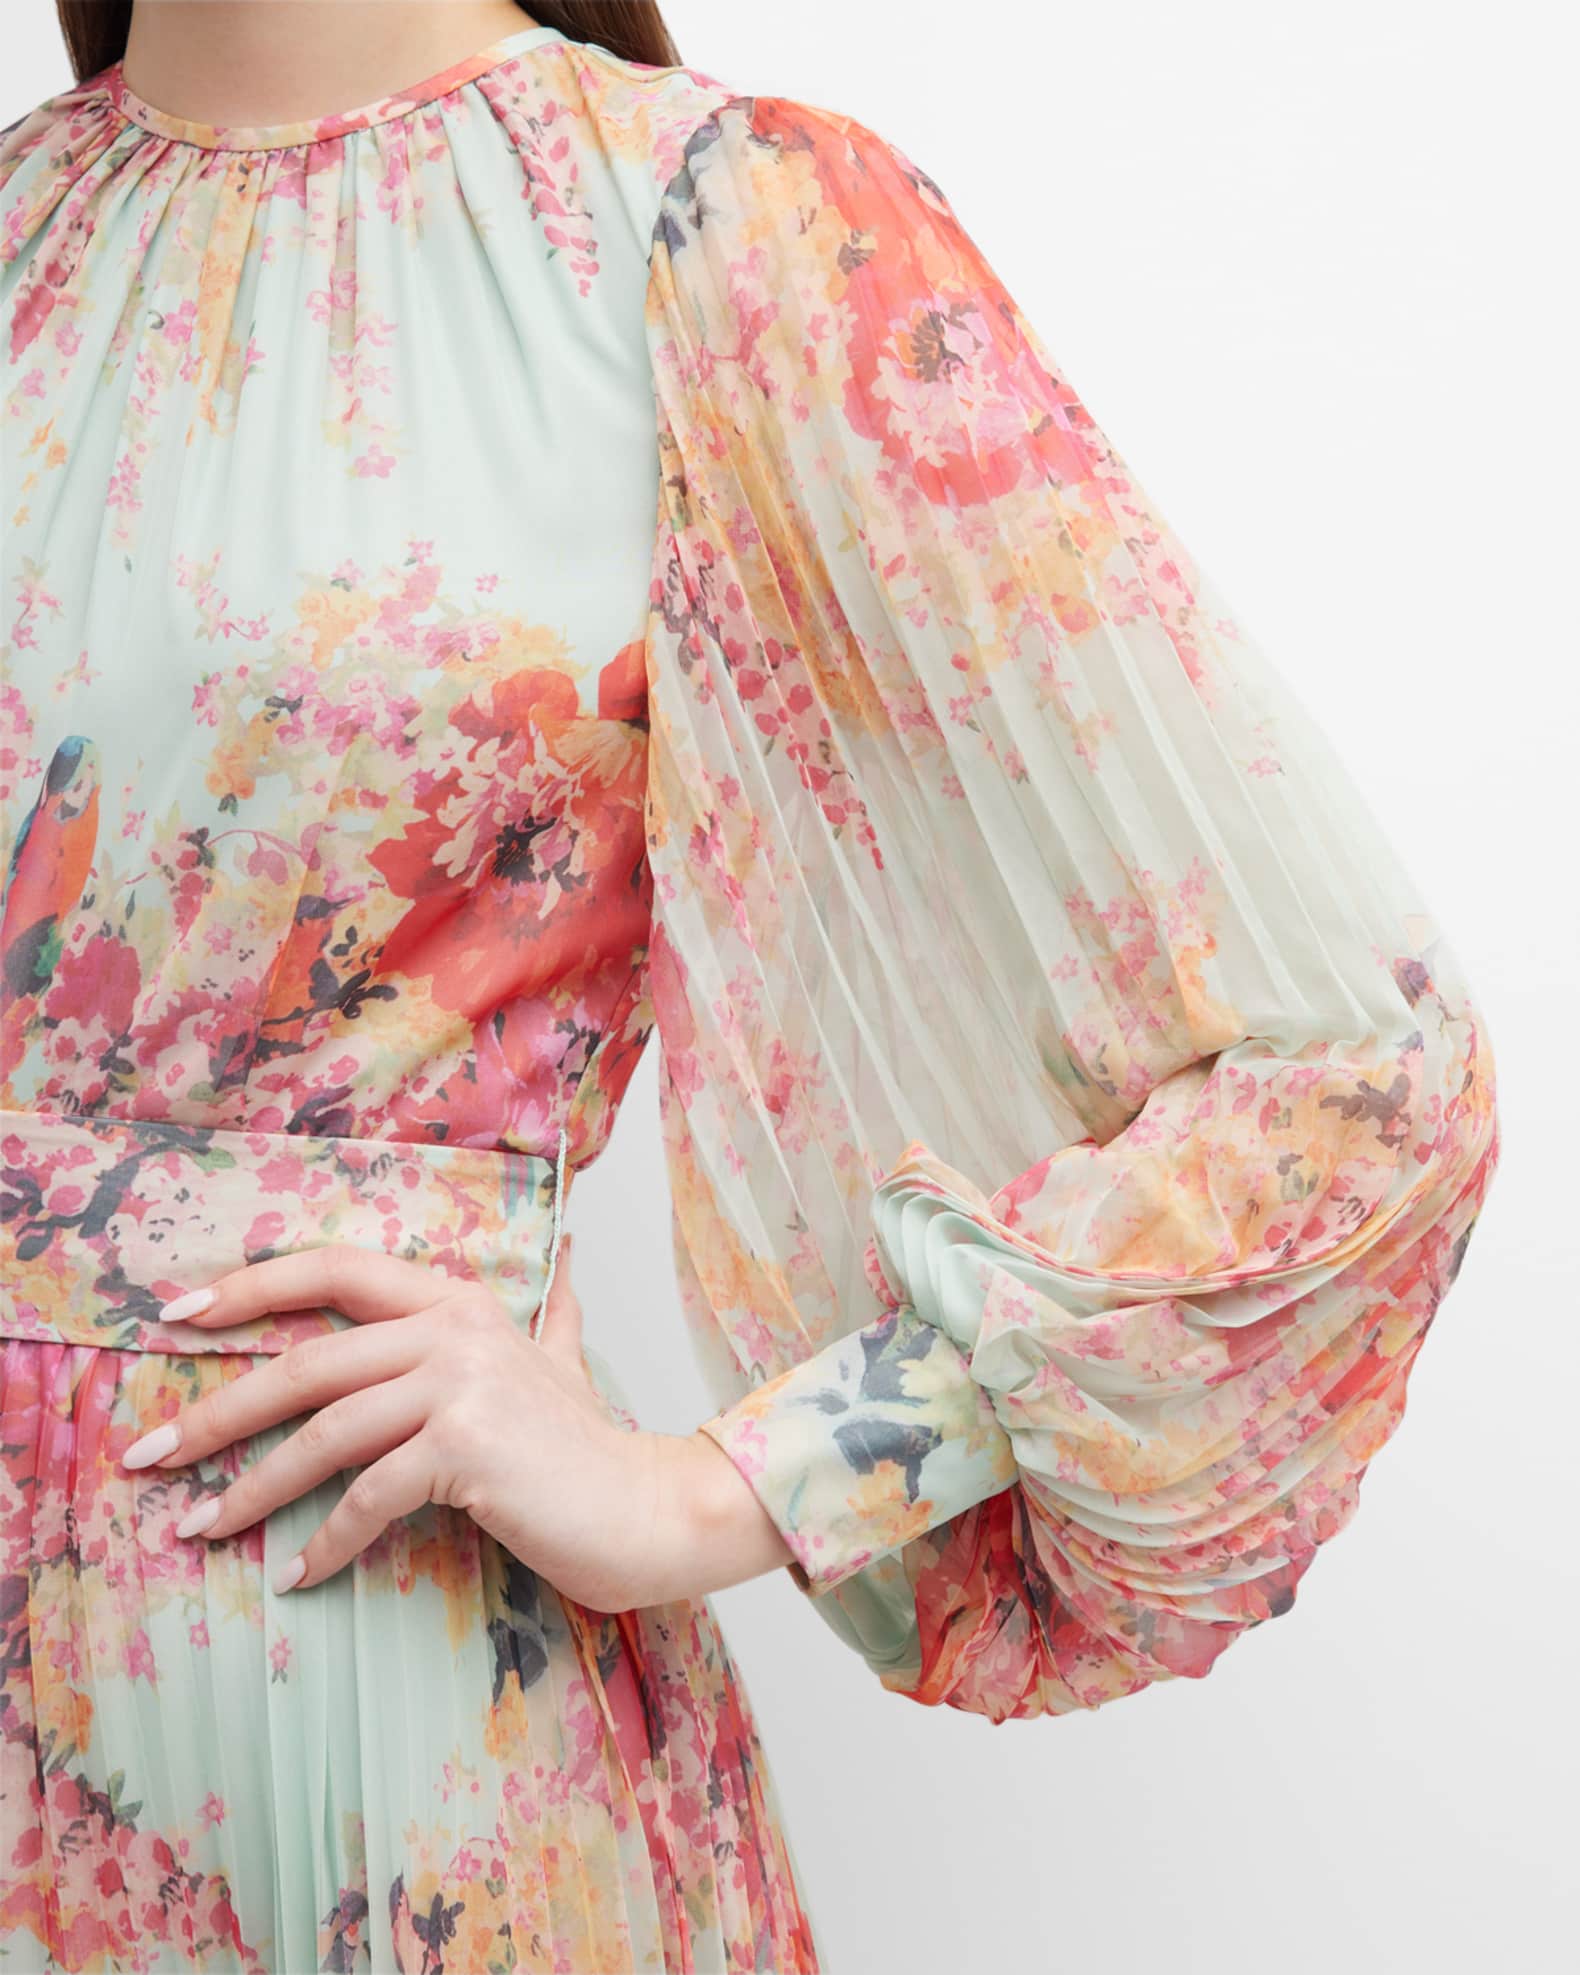 Rickie Freeman for Teri Jon Pleated Floral-Print Blouson-Sleeve Gown ...